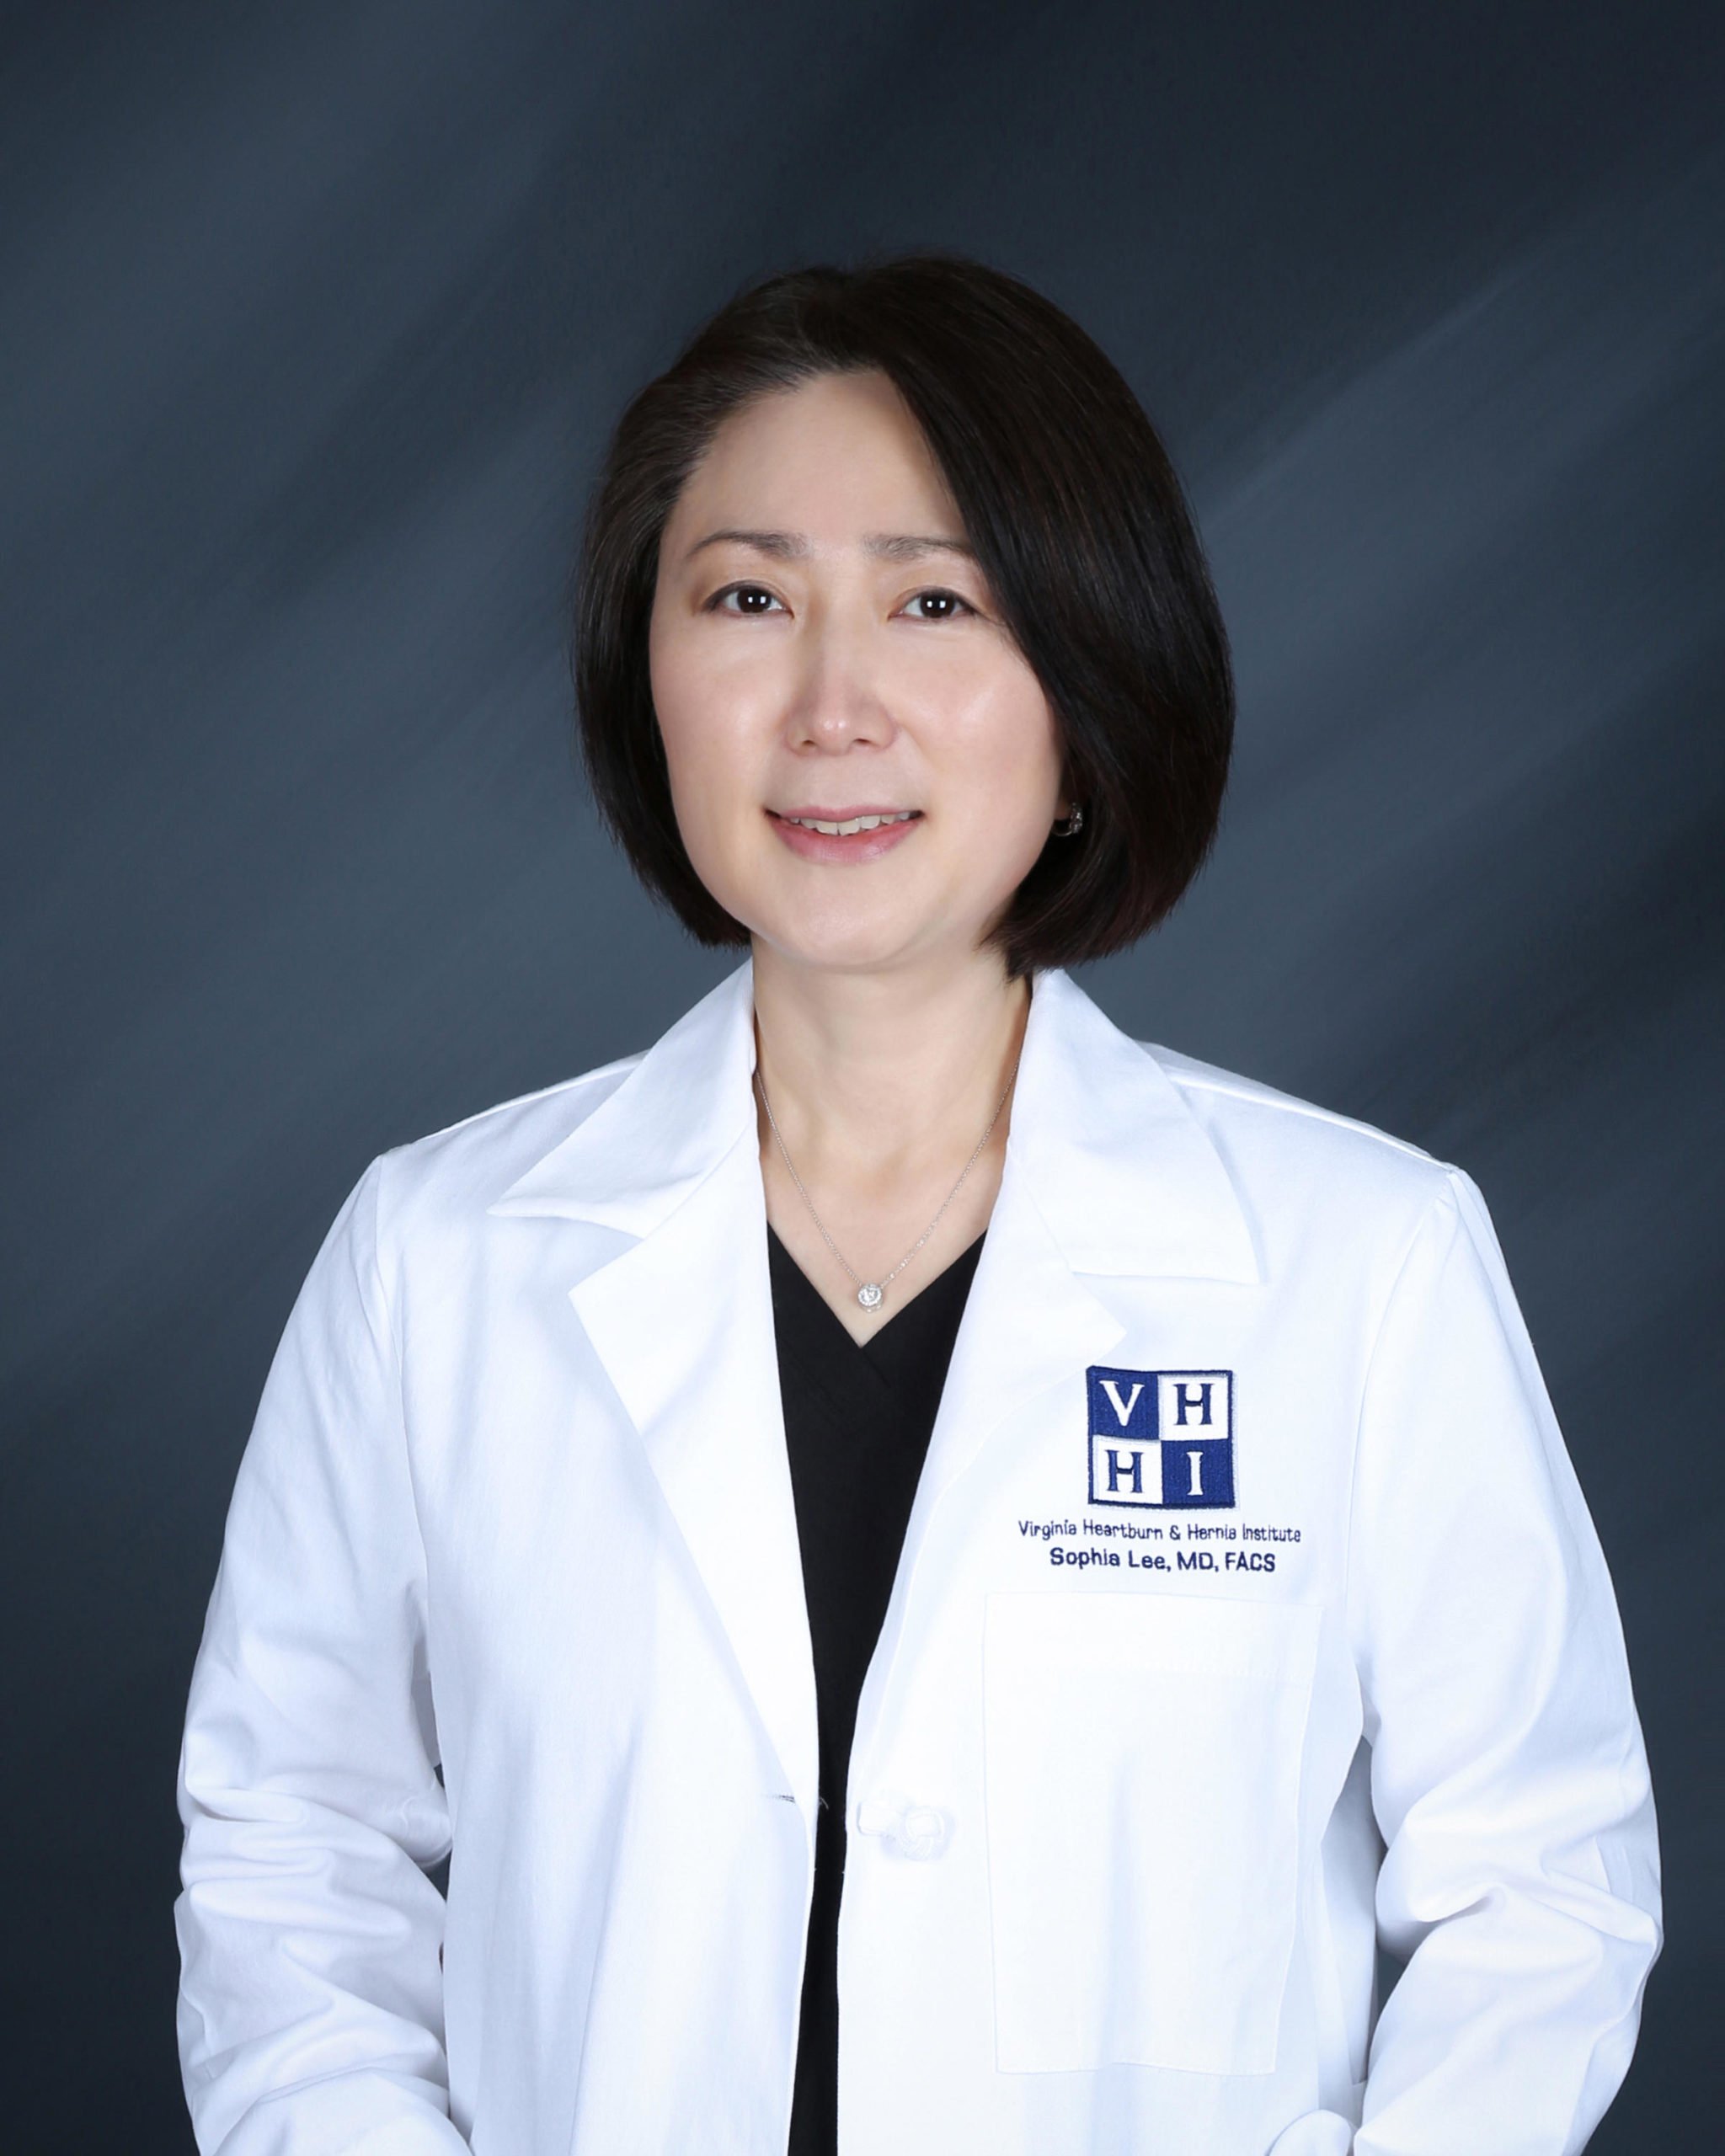 Dr. Sophia D. Lee - Virginia Heartburn and Hernia Institute